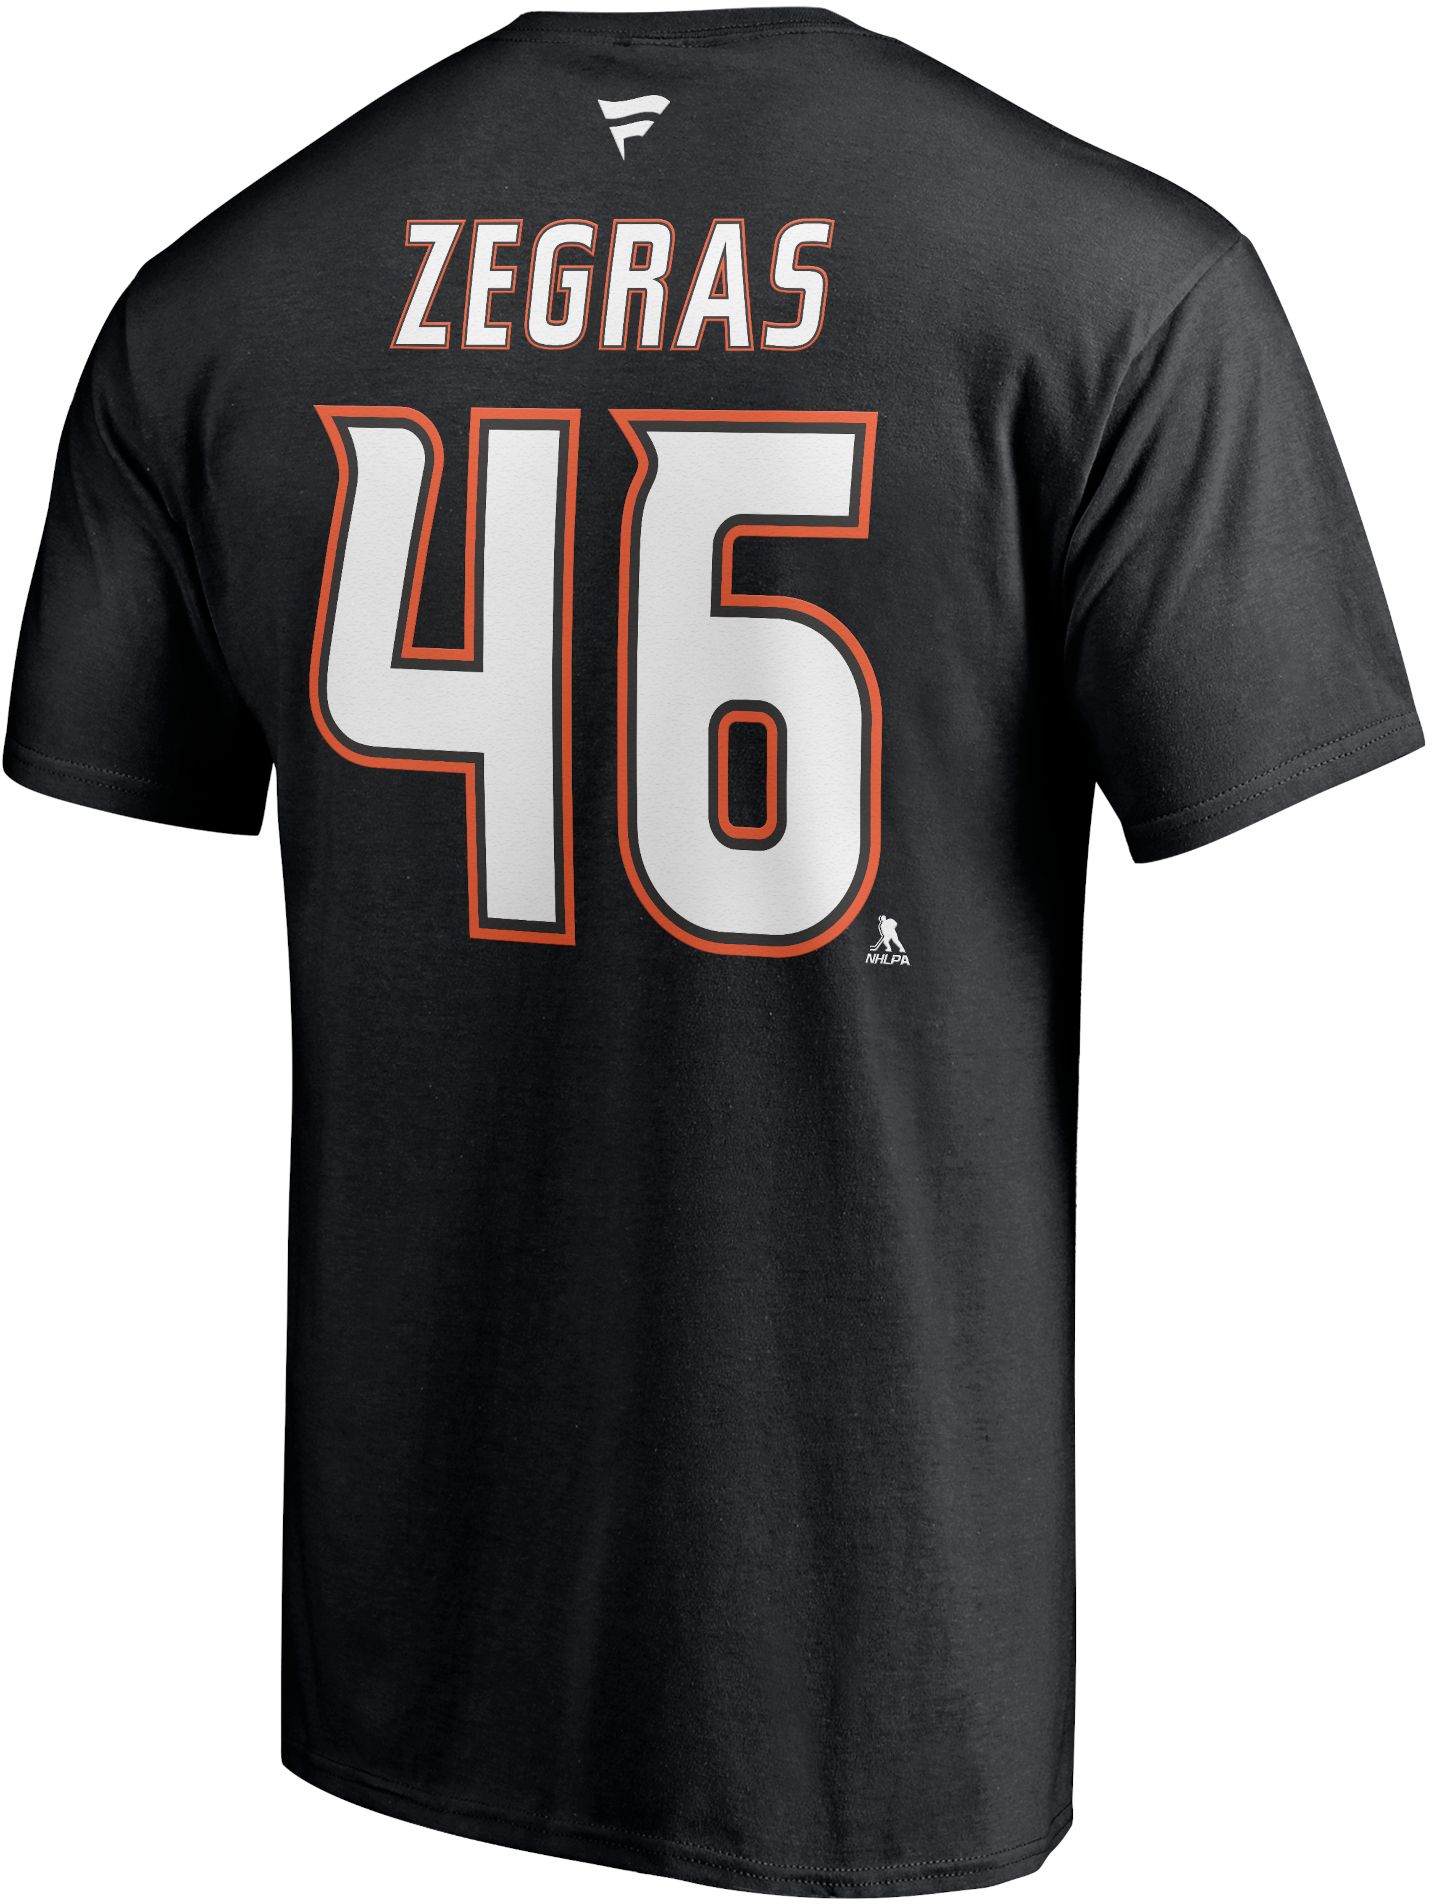 Trevor Zegras 46 Dude Anaheim Ducks shirt - Dalatshirt